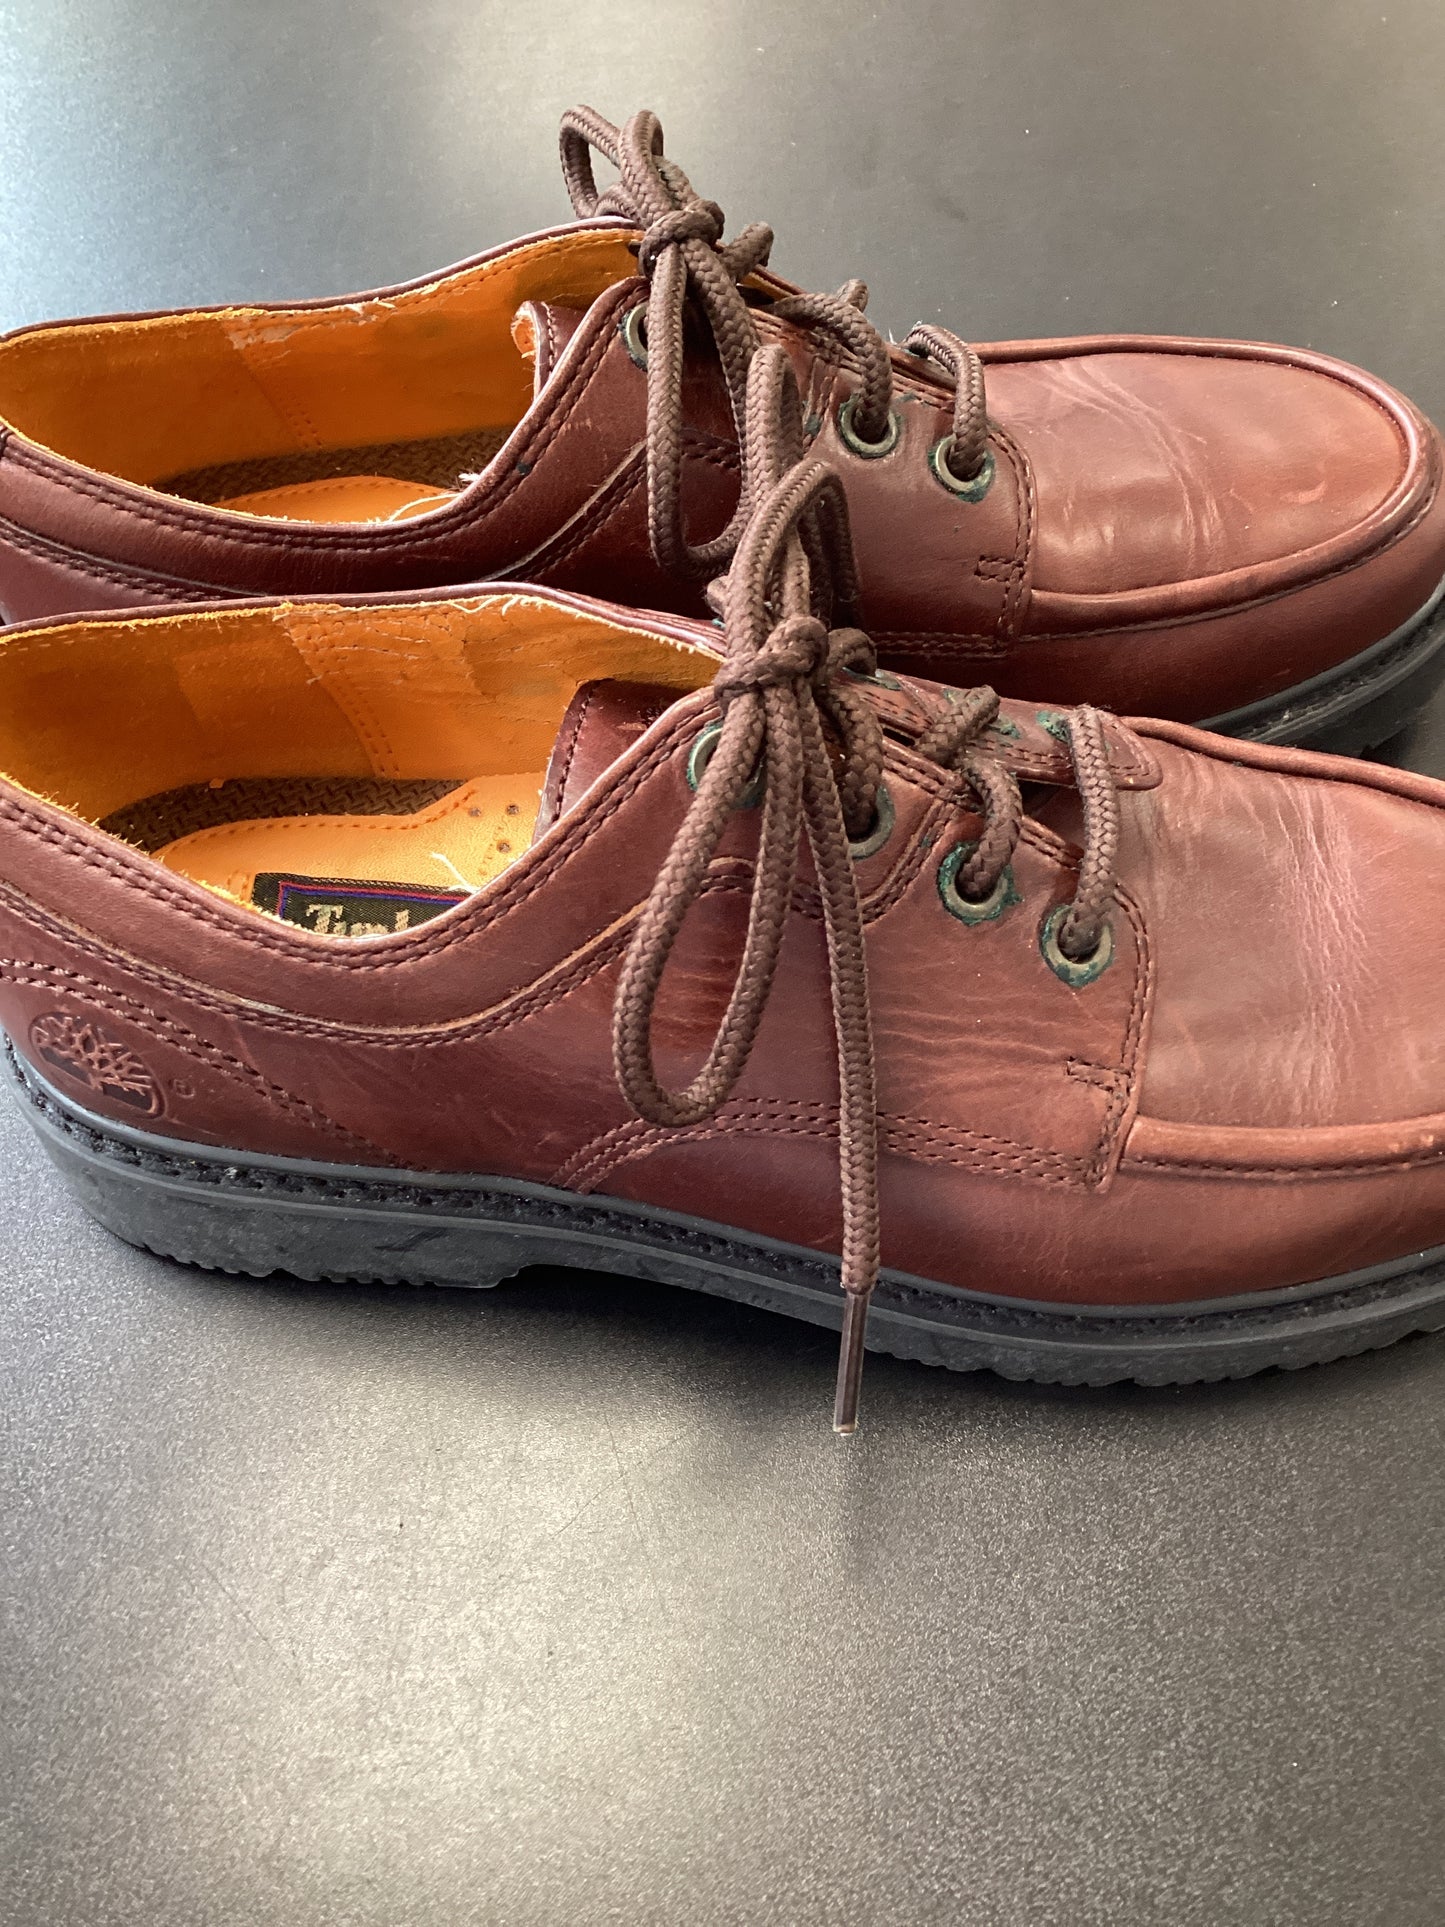 Timberland Burgundy Men’s Waterproof Shoes Size UK 7